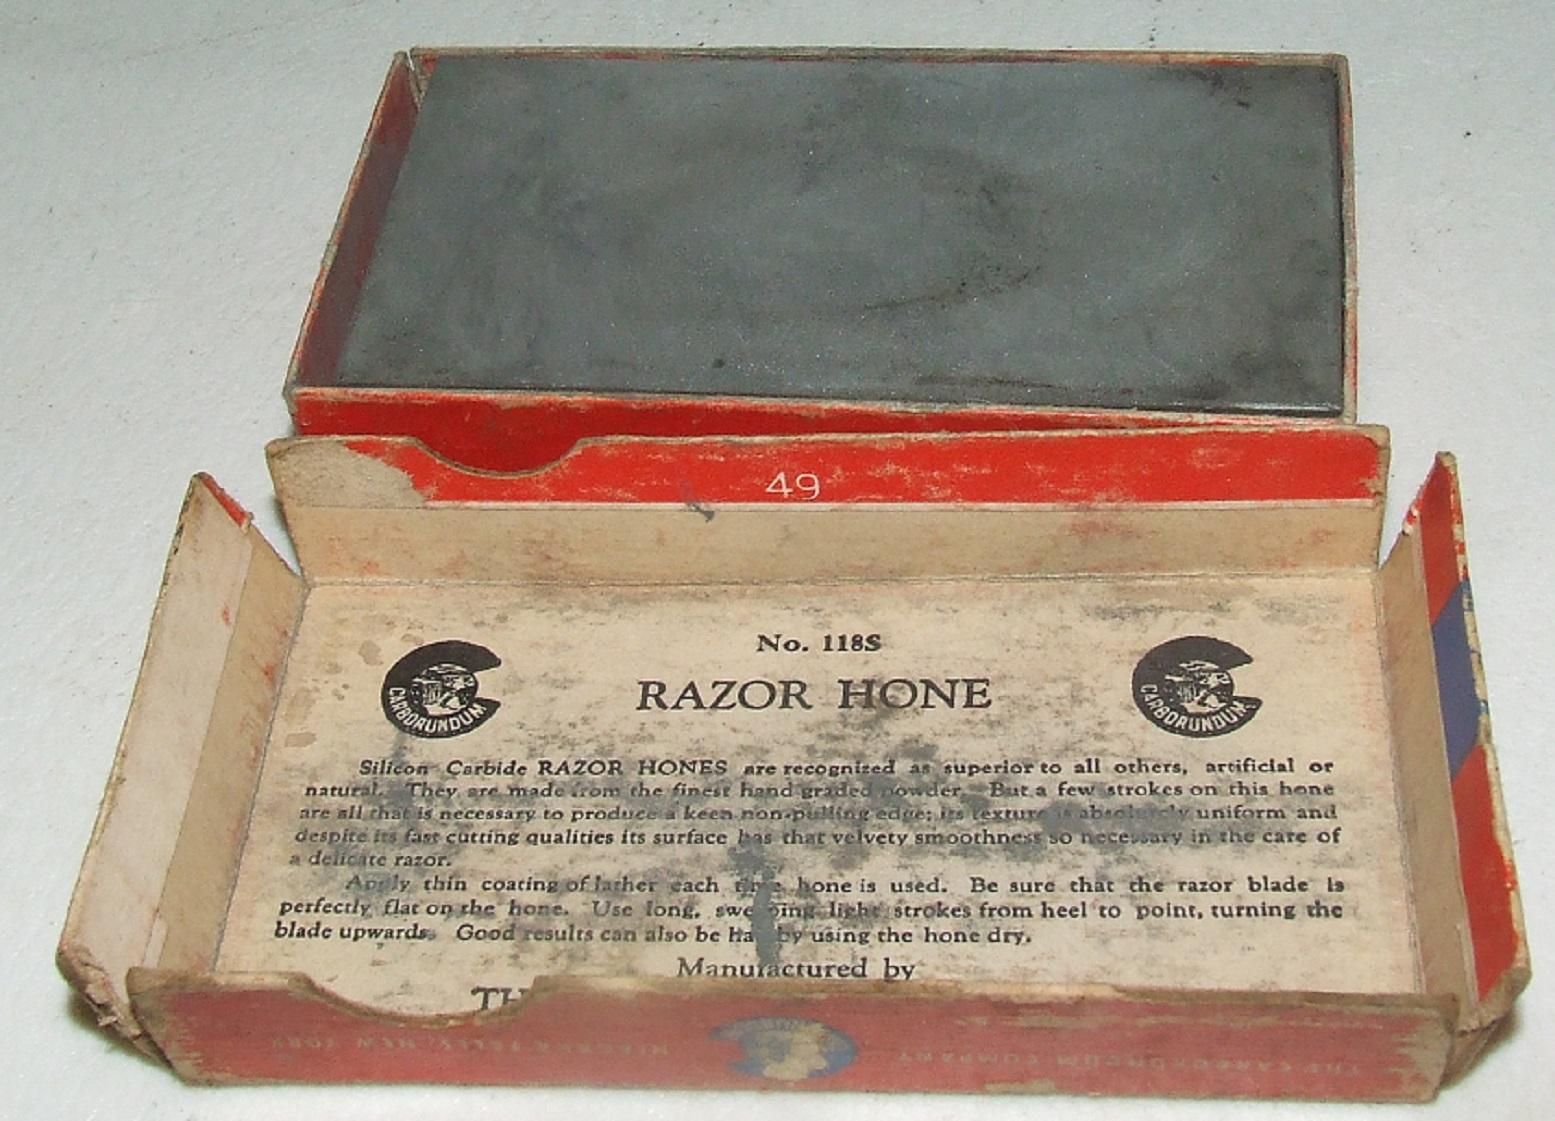 Carborundum Razor Stone & Box